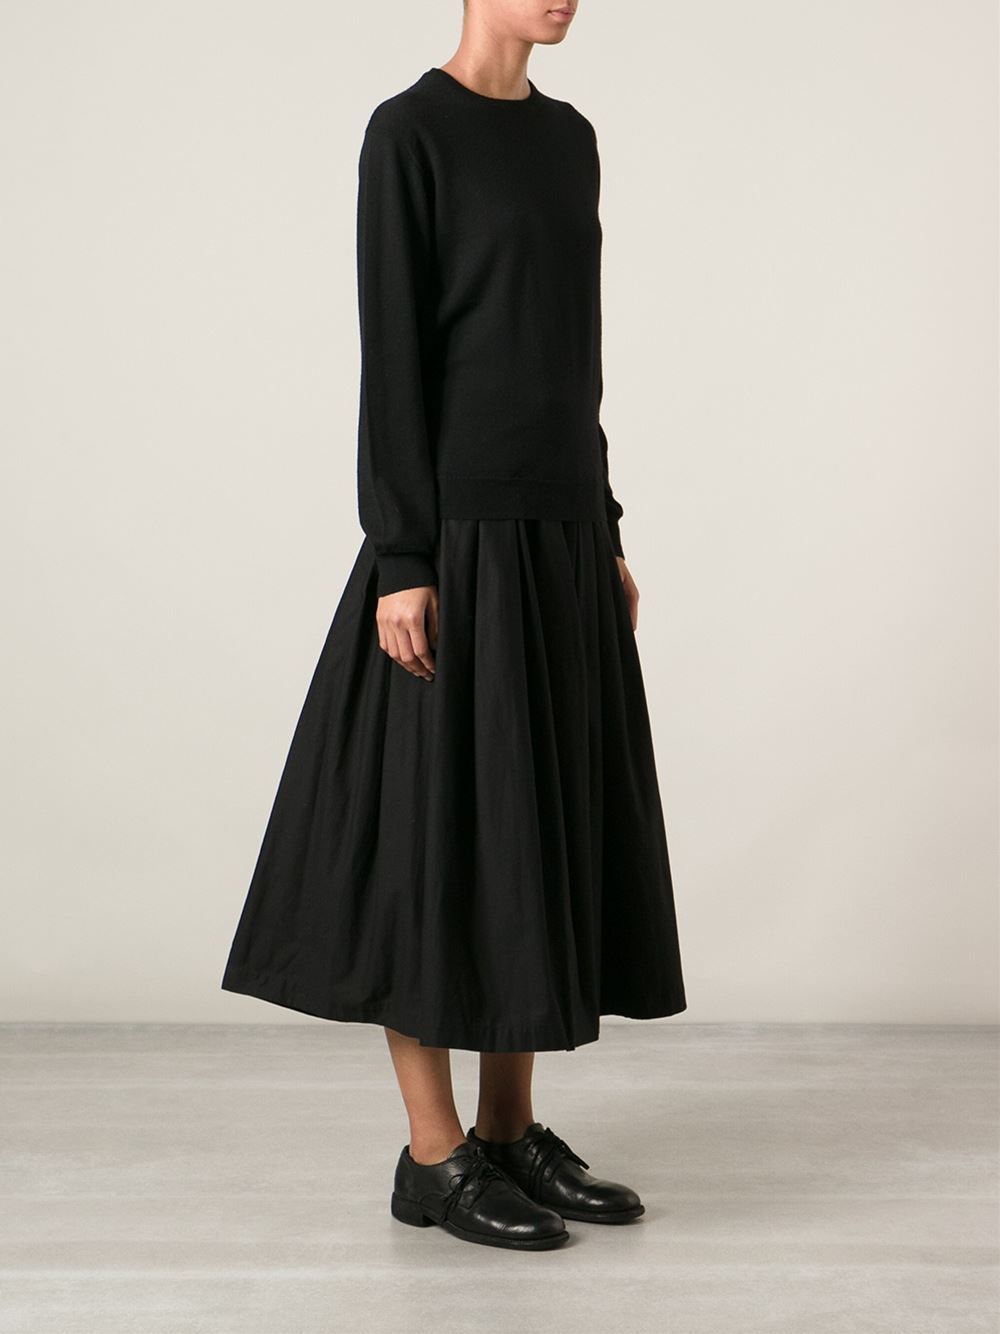 Yohji Yamamoto Pleated Skirt in Black - Lyst